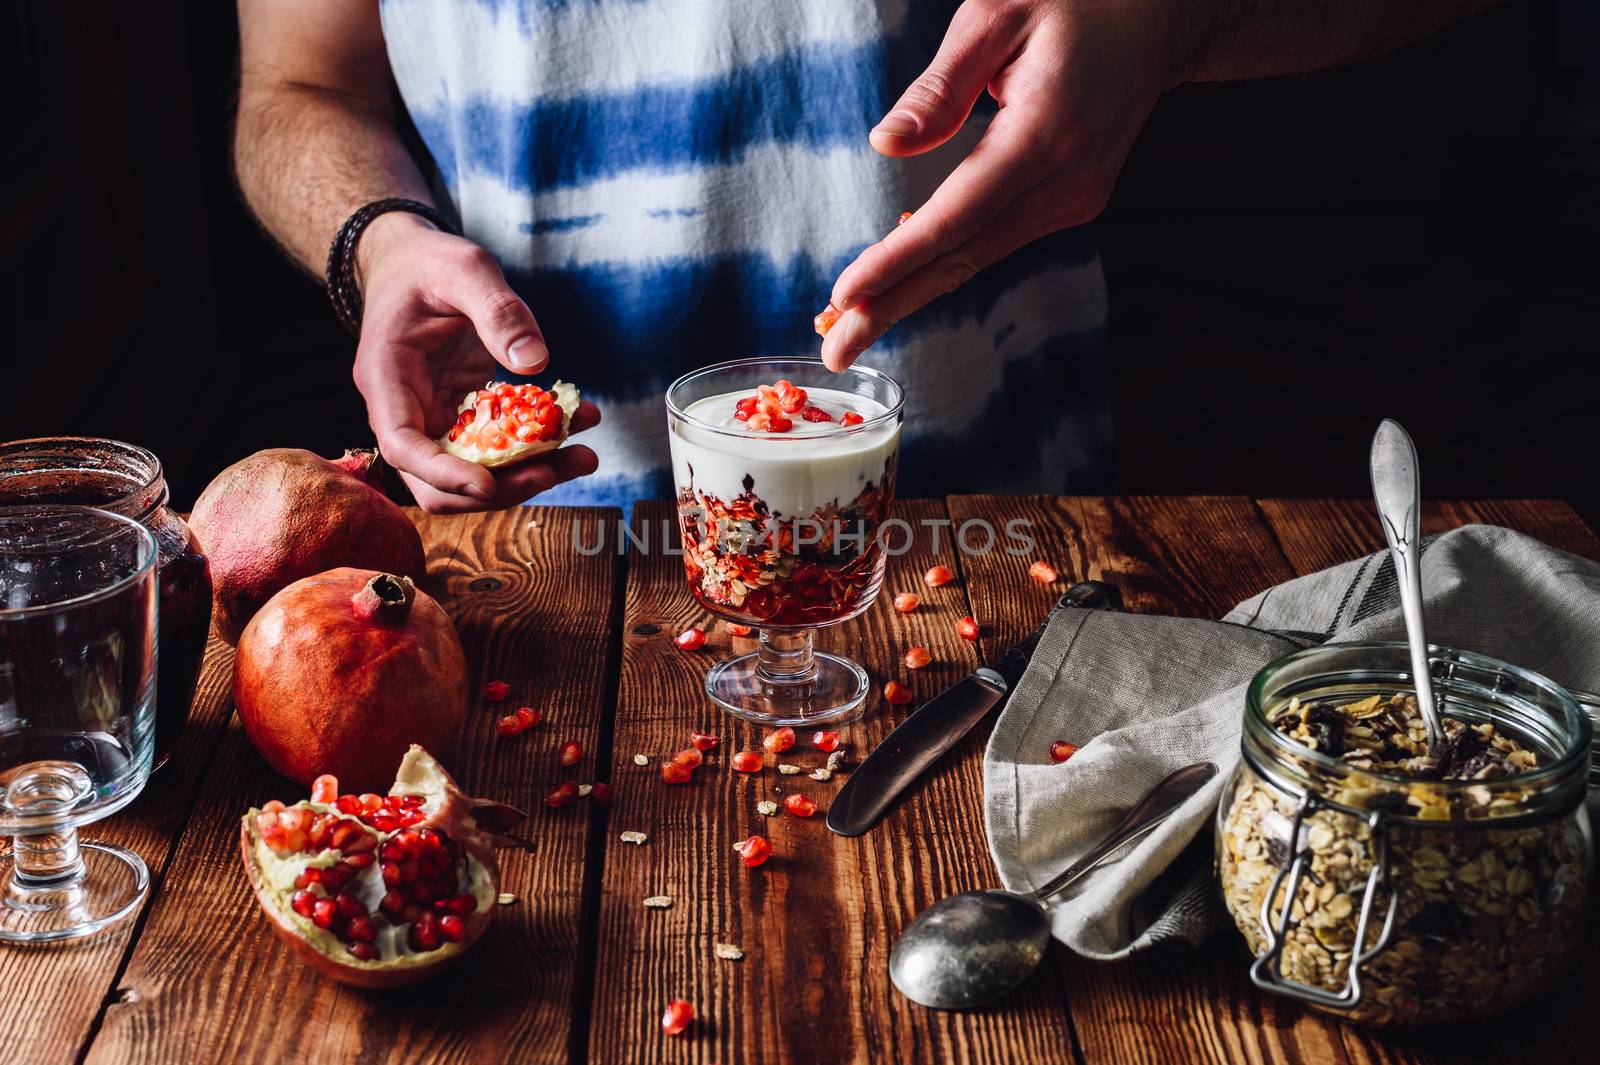 Man Decorates Dessert with Pomegranate Seeds. by Seva_blsv